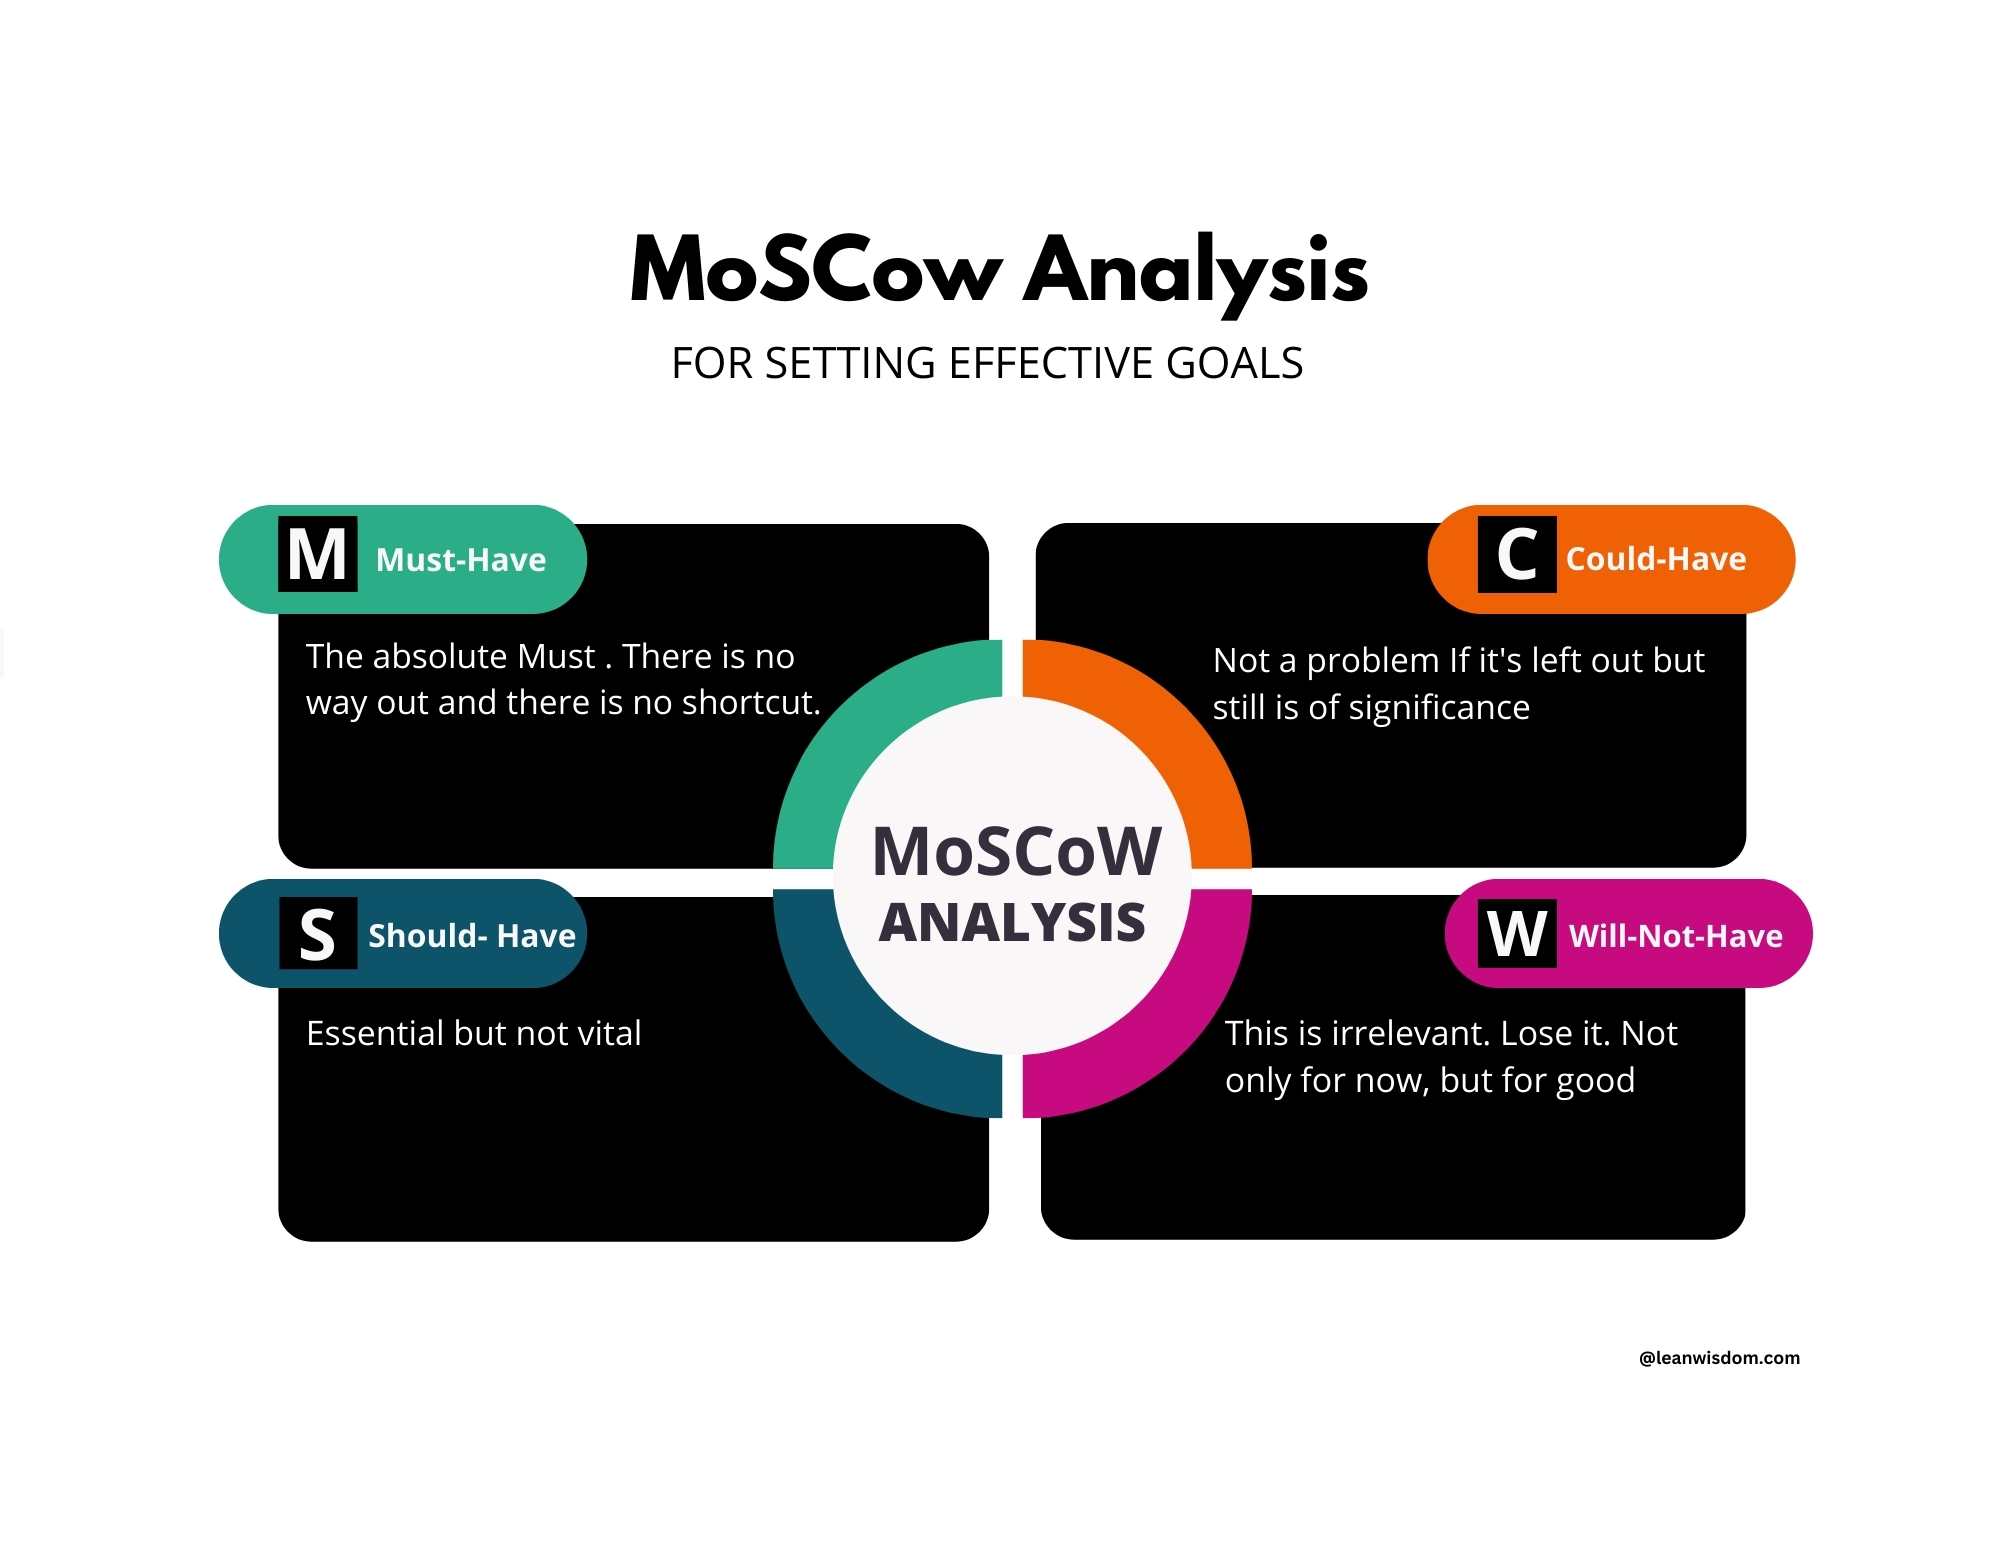 Moscow Analysis